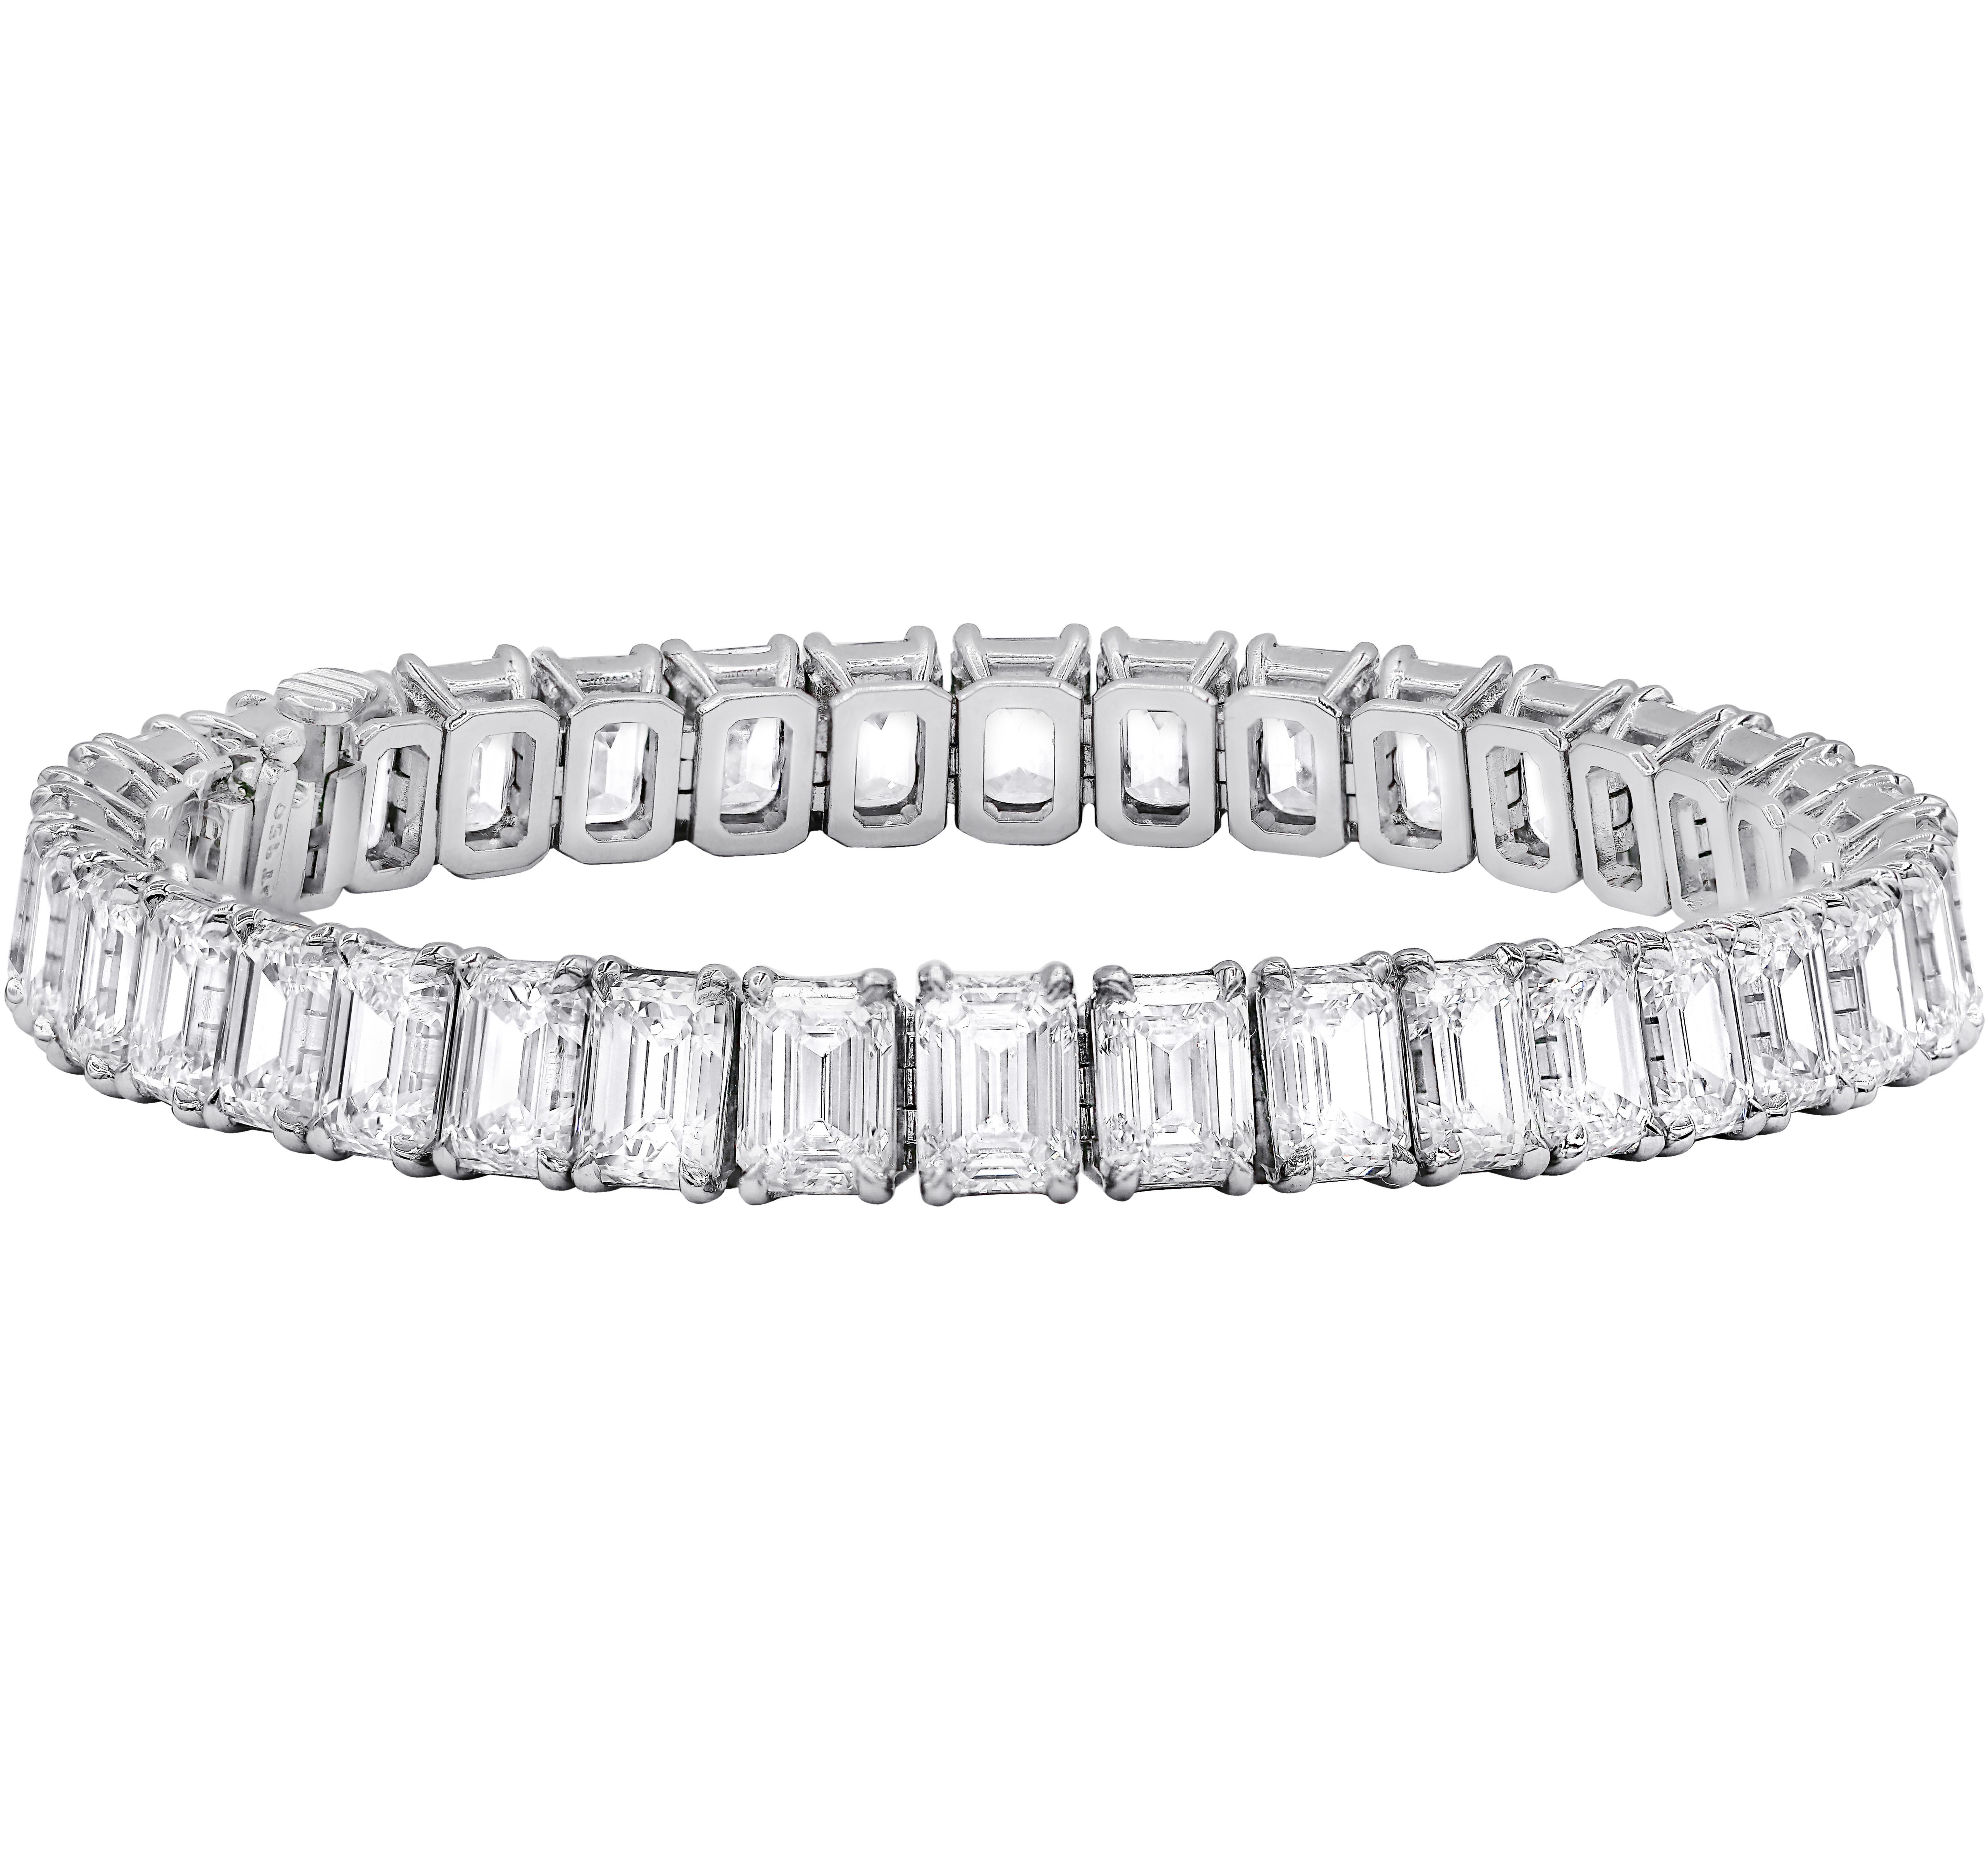 18 kt white gold custom 4 prong diamond bracelet  22.88 cts  GIA certified emerald cut diamonds—color DEF clarity VVS-VS, 44 stones 0.52 each. Excellent Cut.


